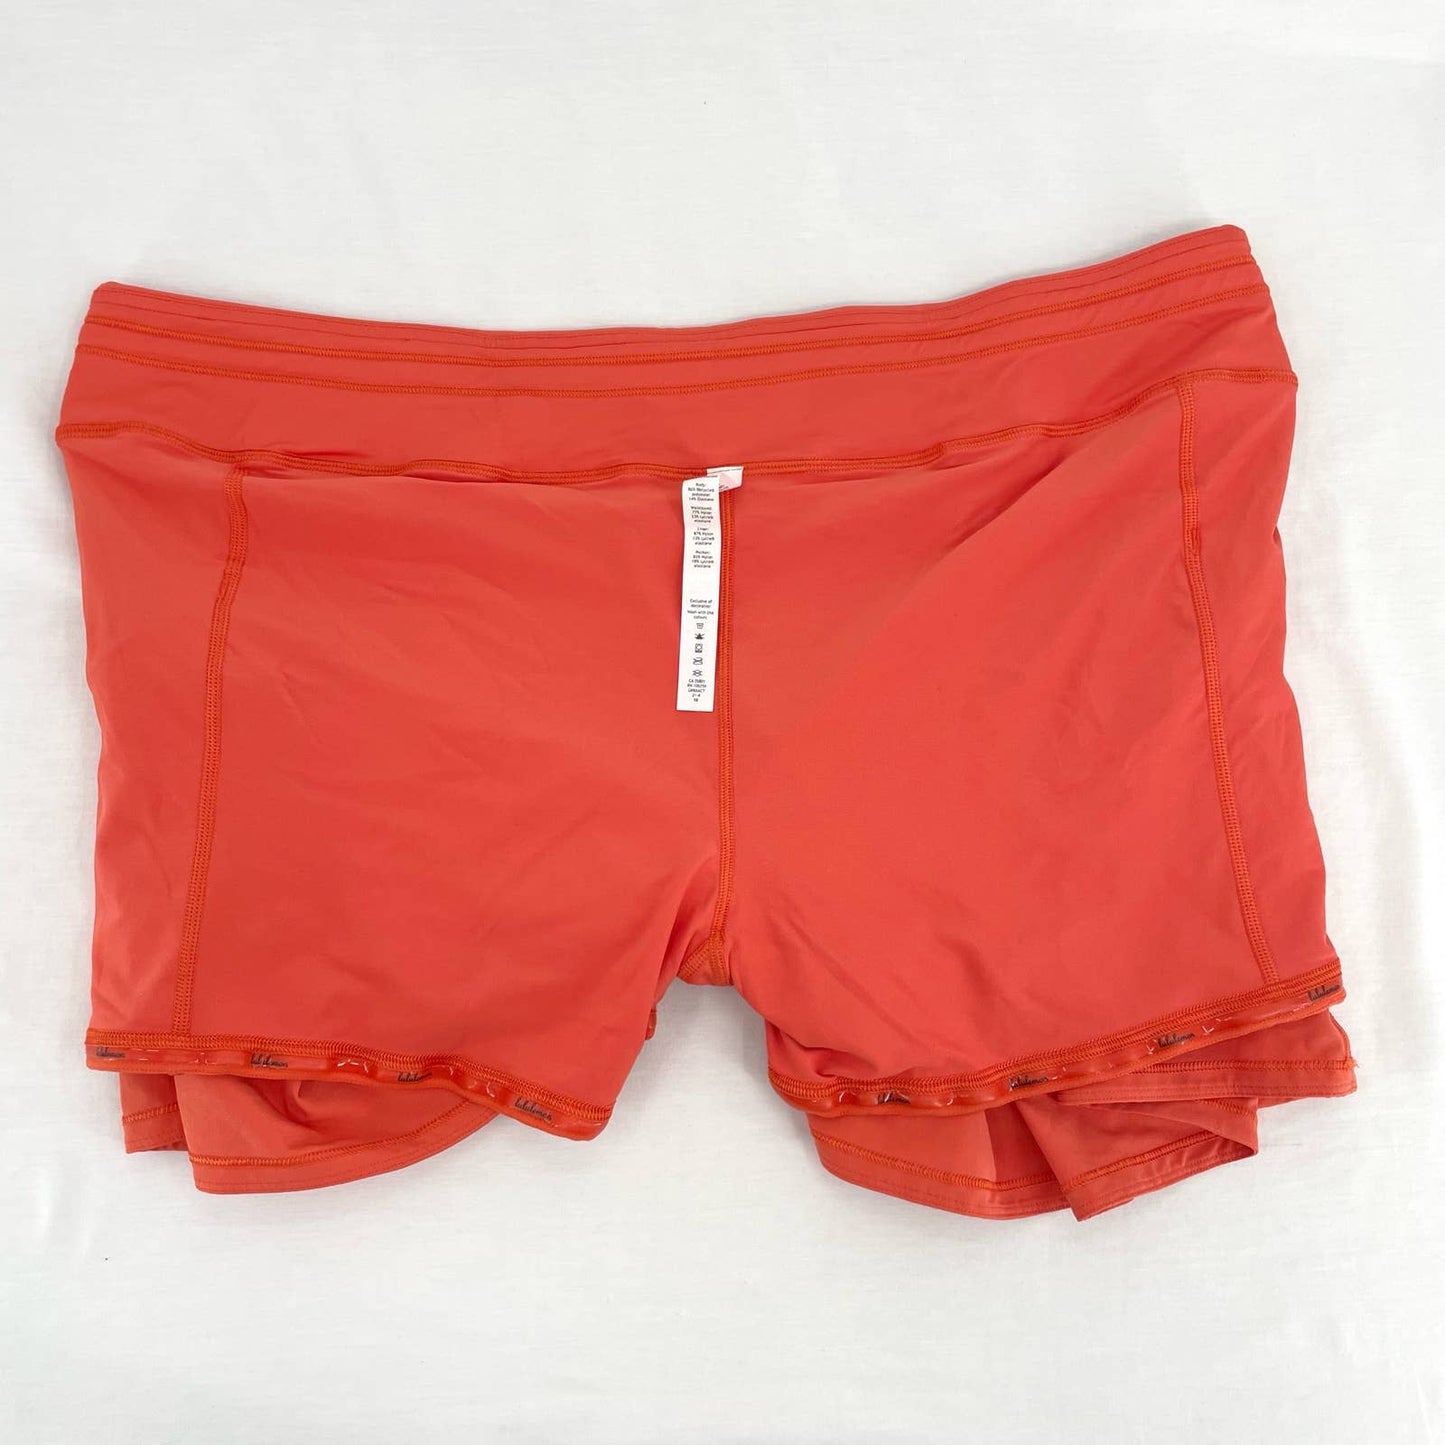 Lululemon Tall Pace Rival Active Skirt Skort Warm Coral Orange Pleats Tennis Size 18